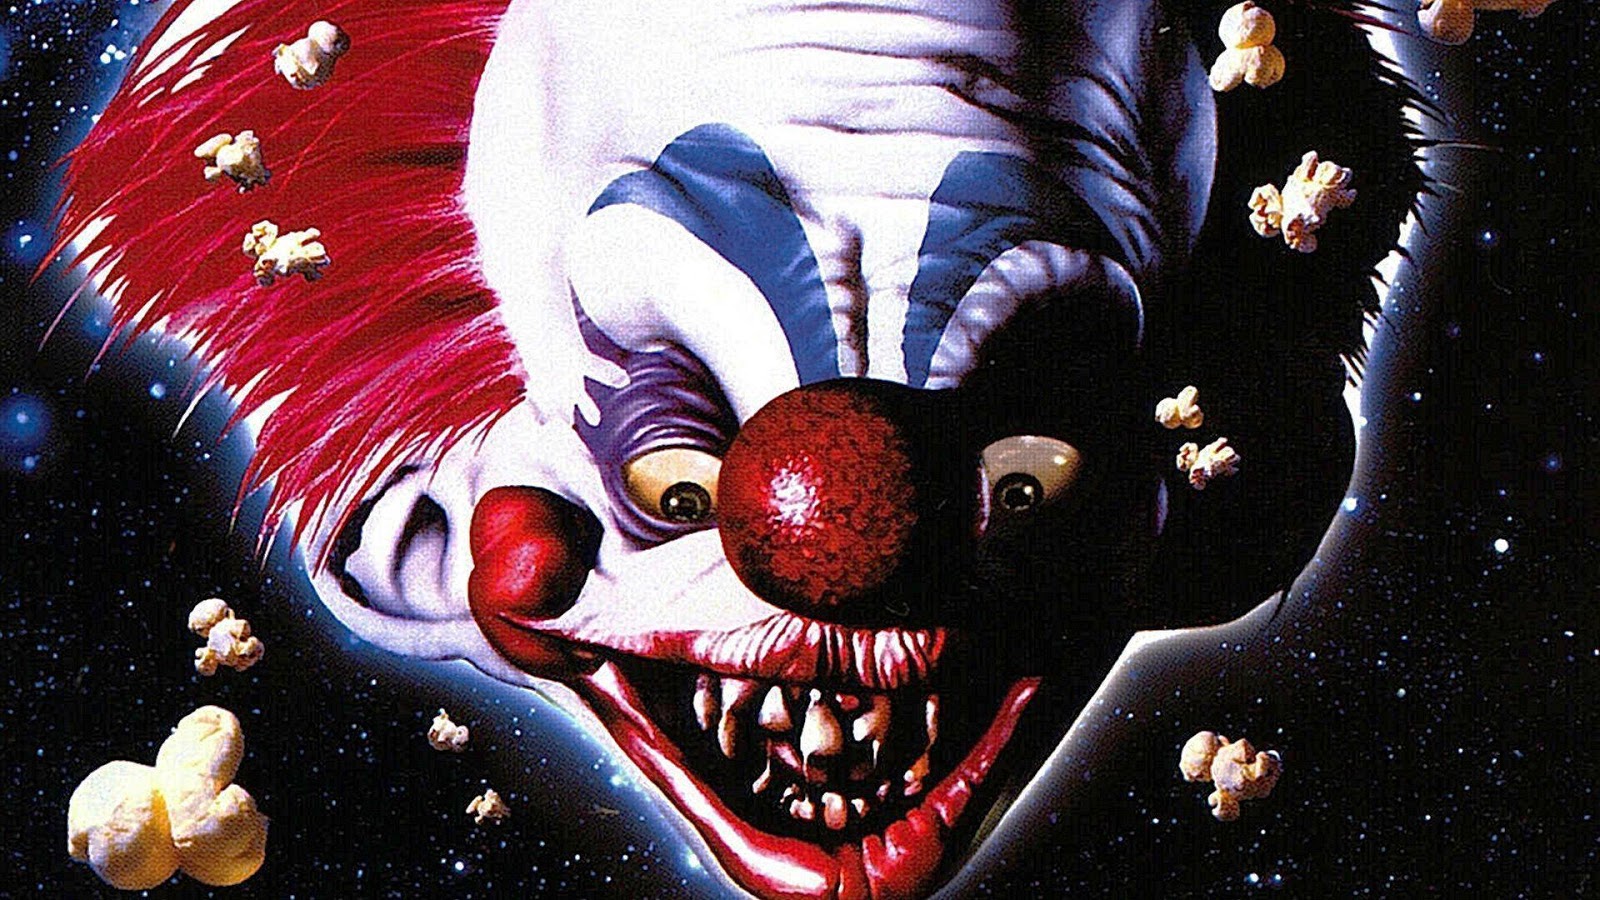 killer clown wallpaper,clown,illustration,performing arts,fiction,fictional character